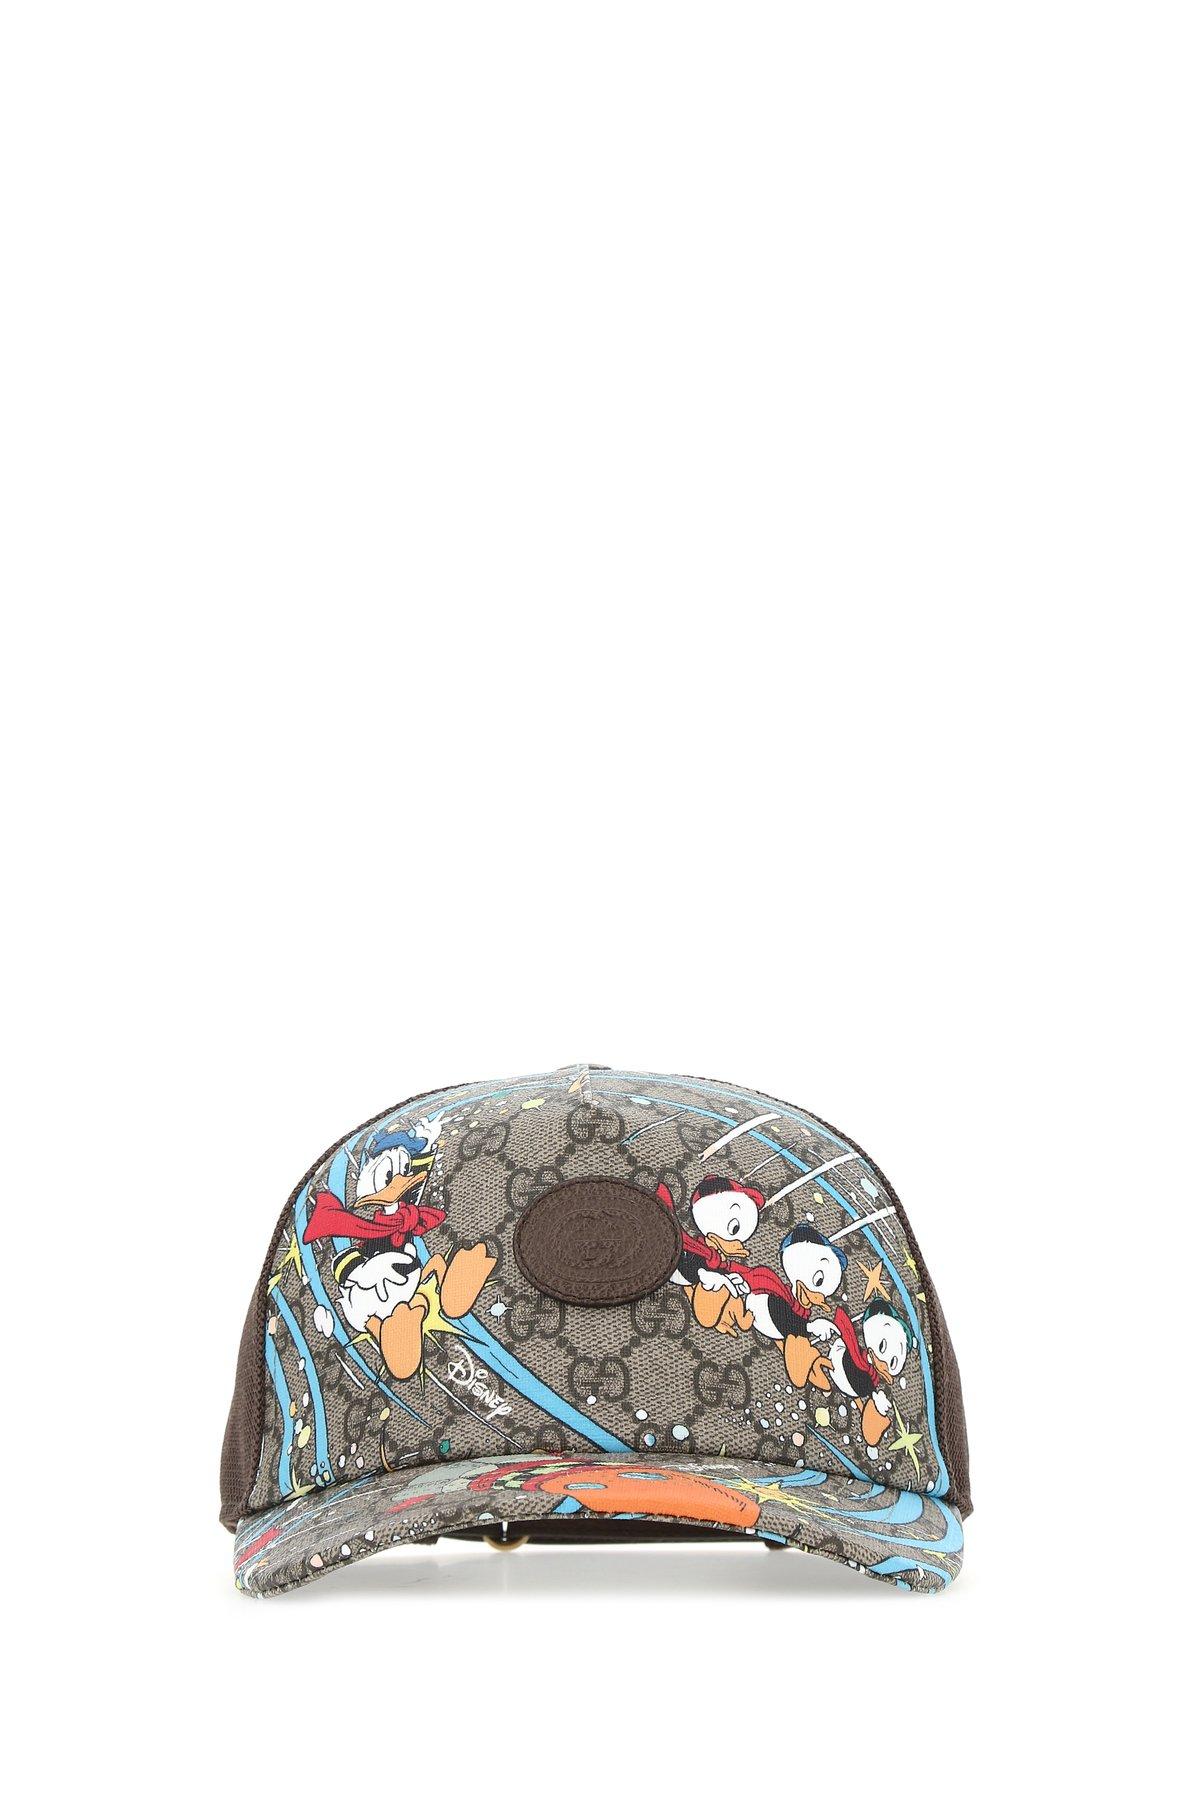 Gucci Cotton X Disney Donald Duck Baseball Hat for Men - Lyst